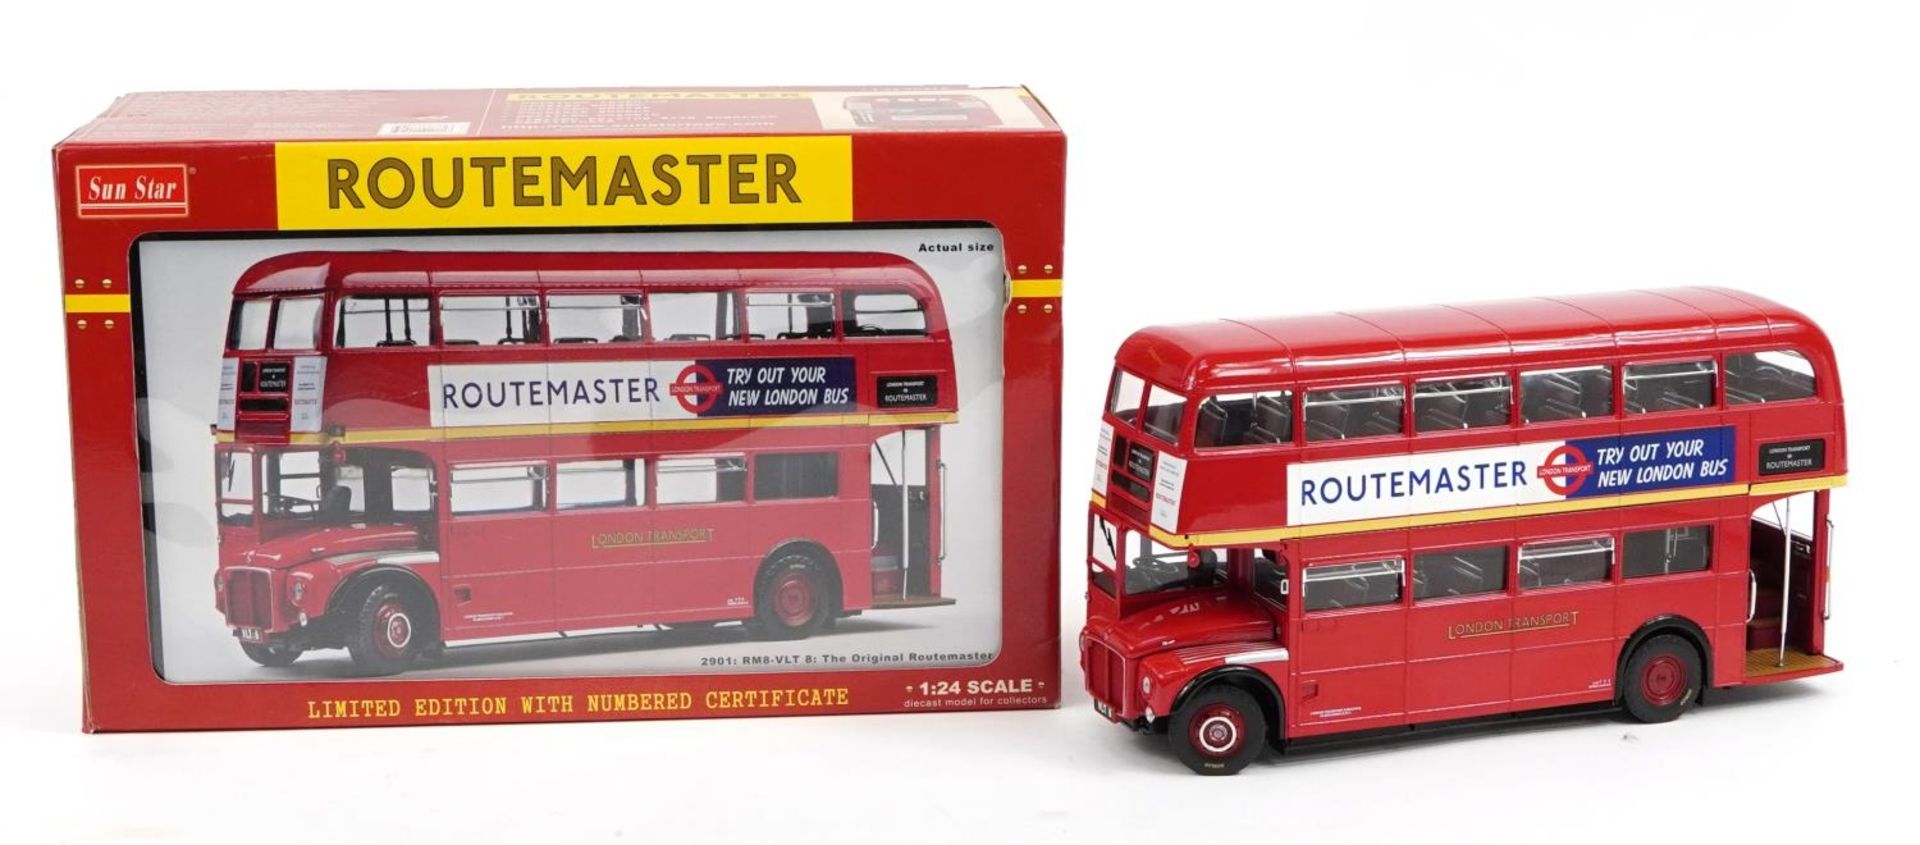 Sun Star Routemaster diecast VM8-VLT Routemaster bus with box, scale1:24